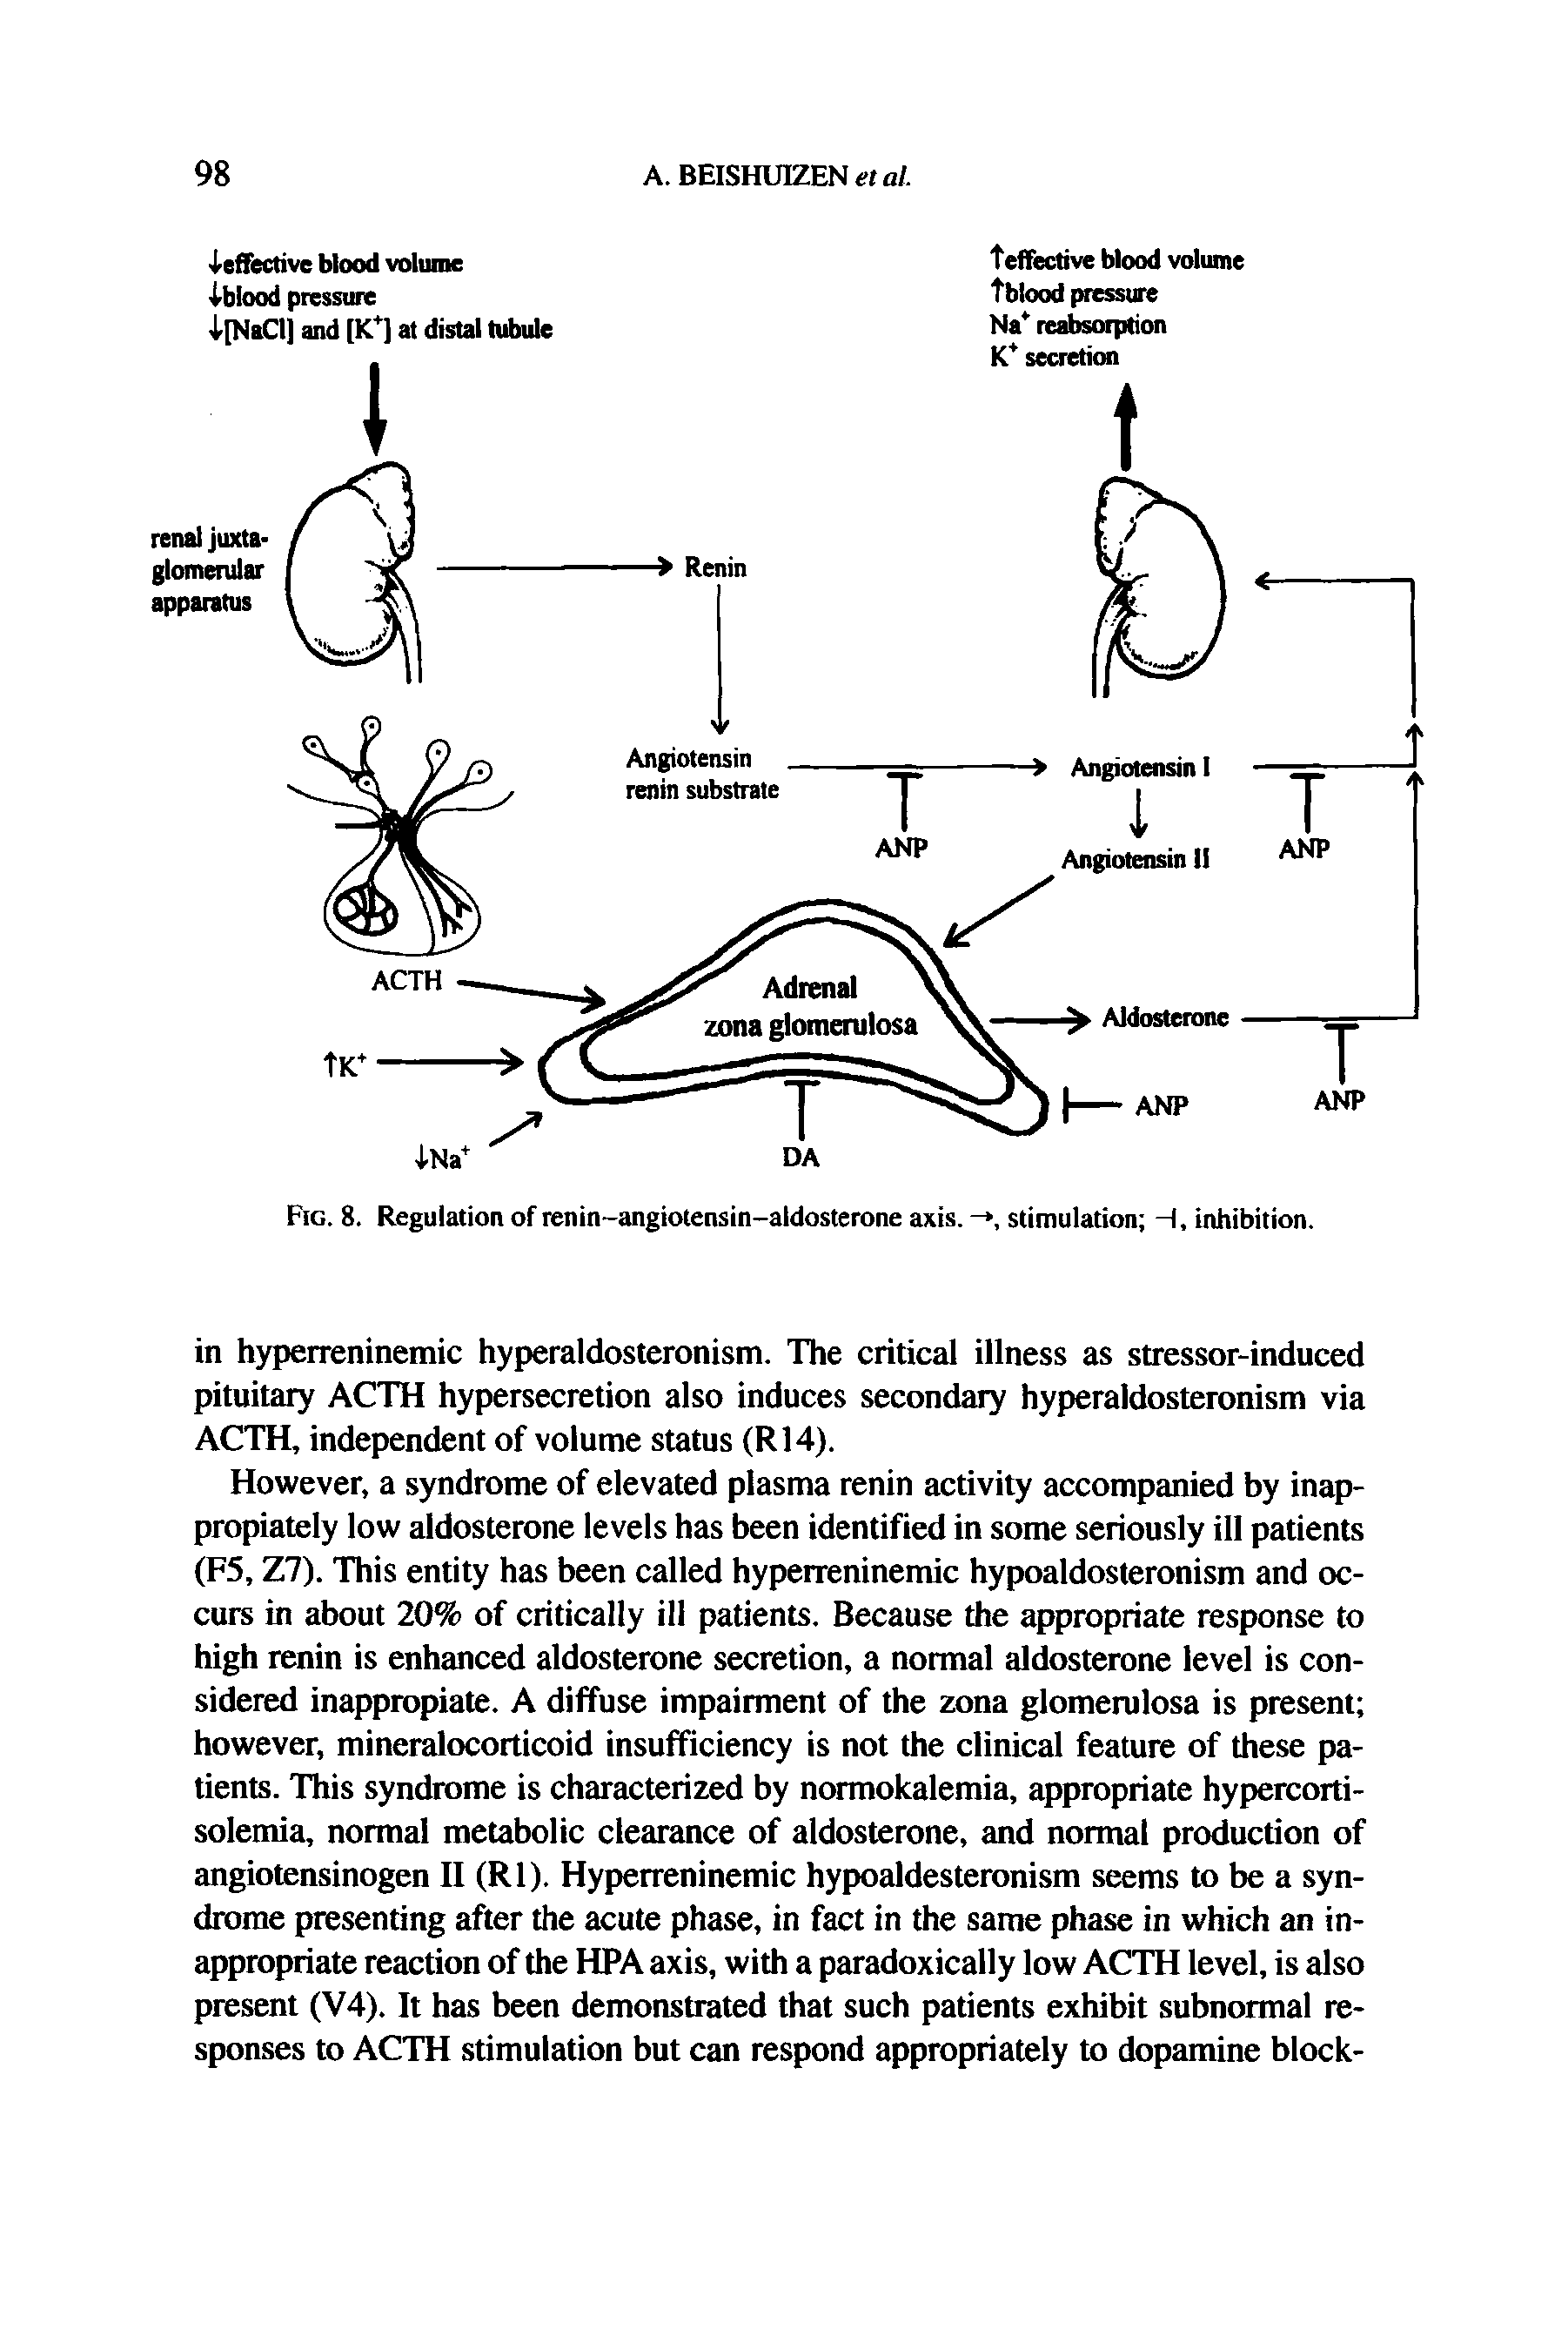 Fig. 8. Regulation of renin-angiotensin-aldosterone axis. stimulation -I, inhibition.